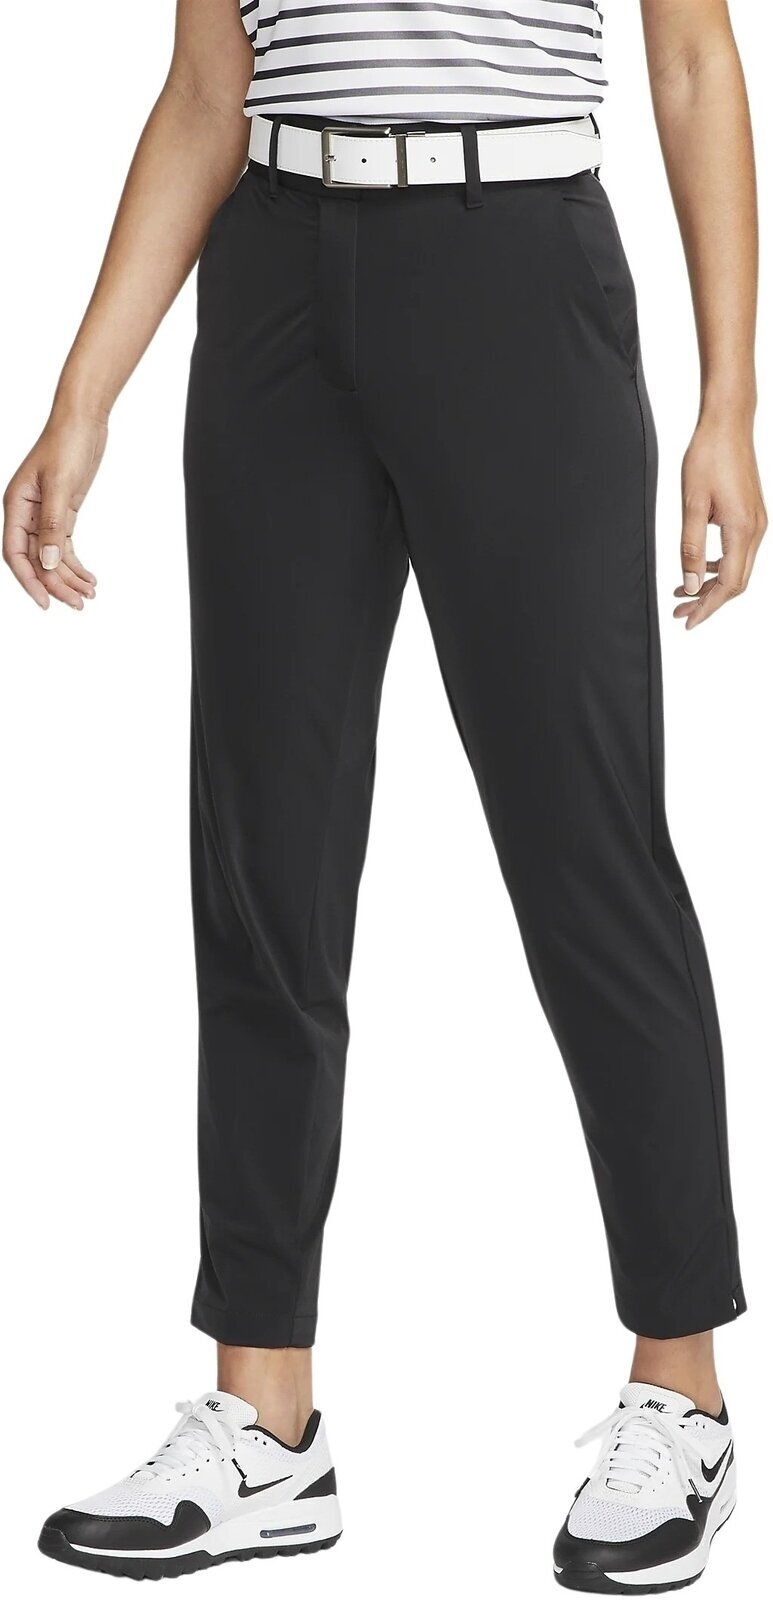 Calças Nike Dri-Fit Tour Womens Pants Black/White S